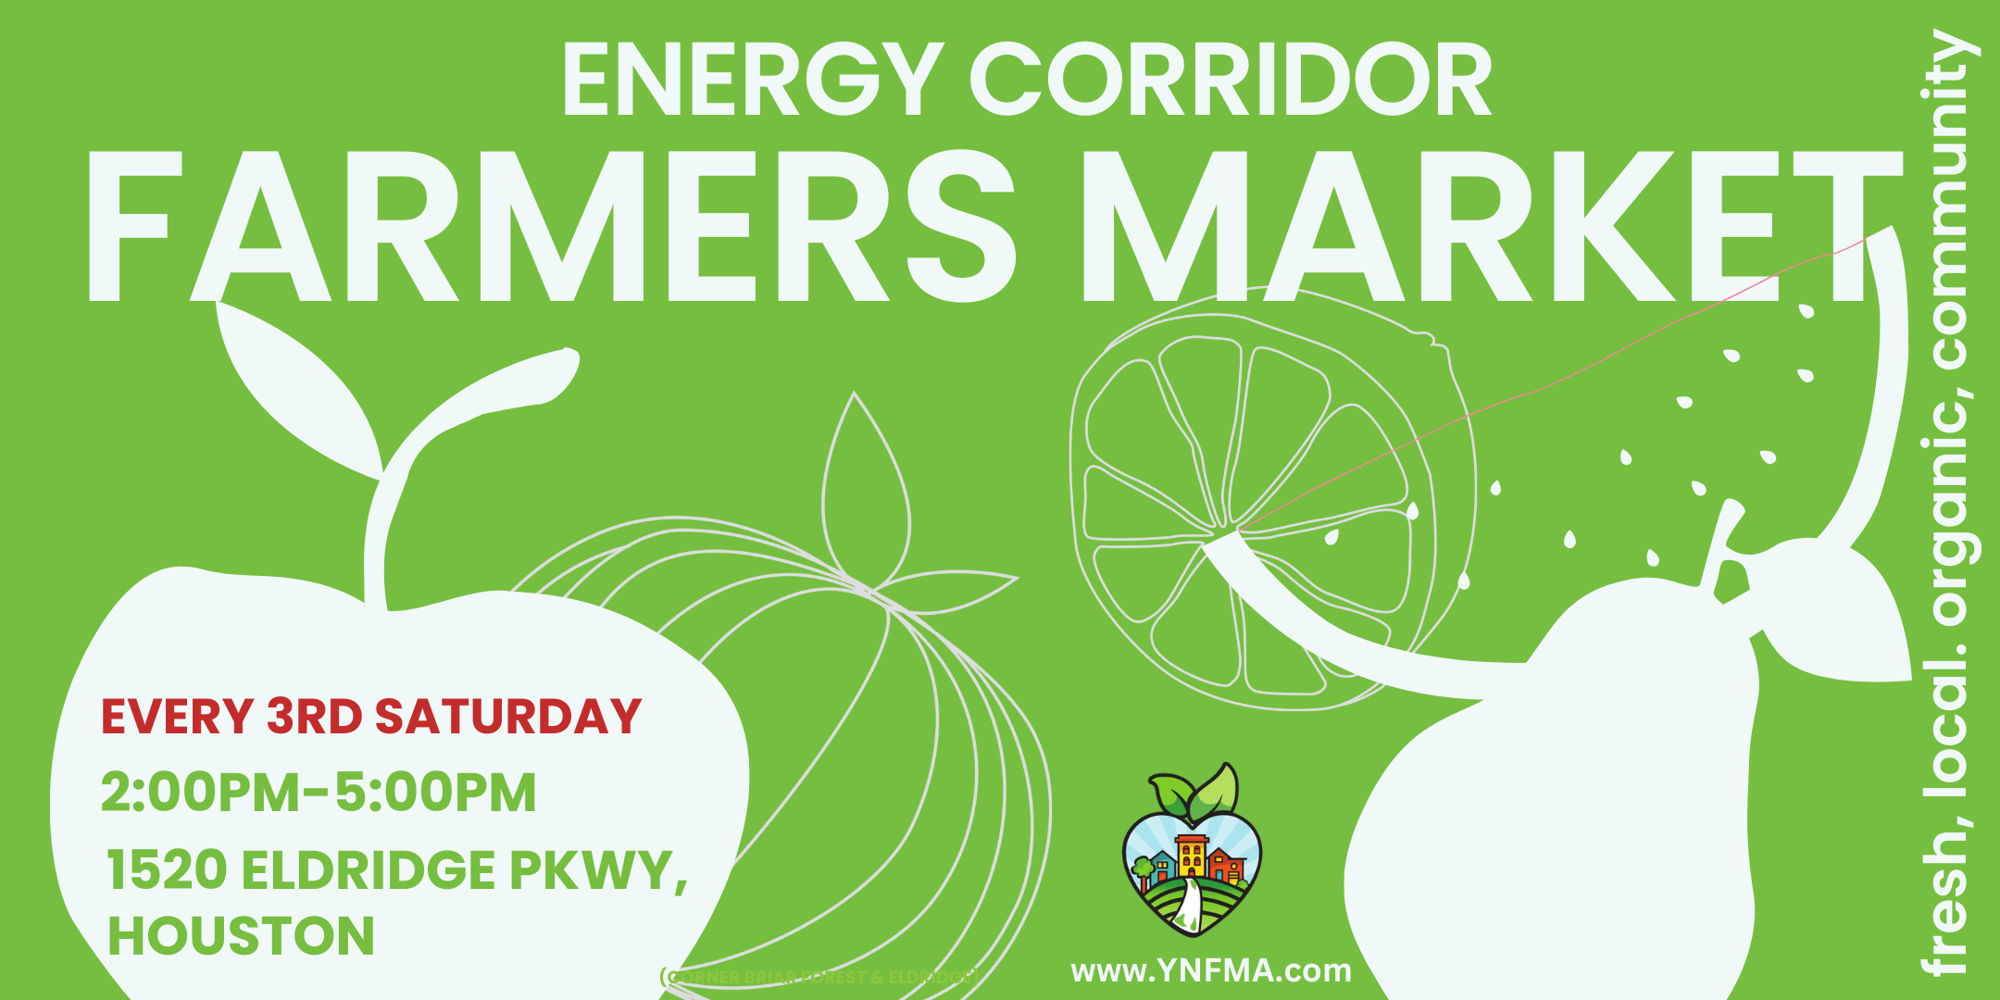 Energy Corridor Farmers Market  promotional image